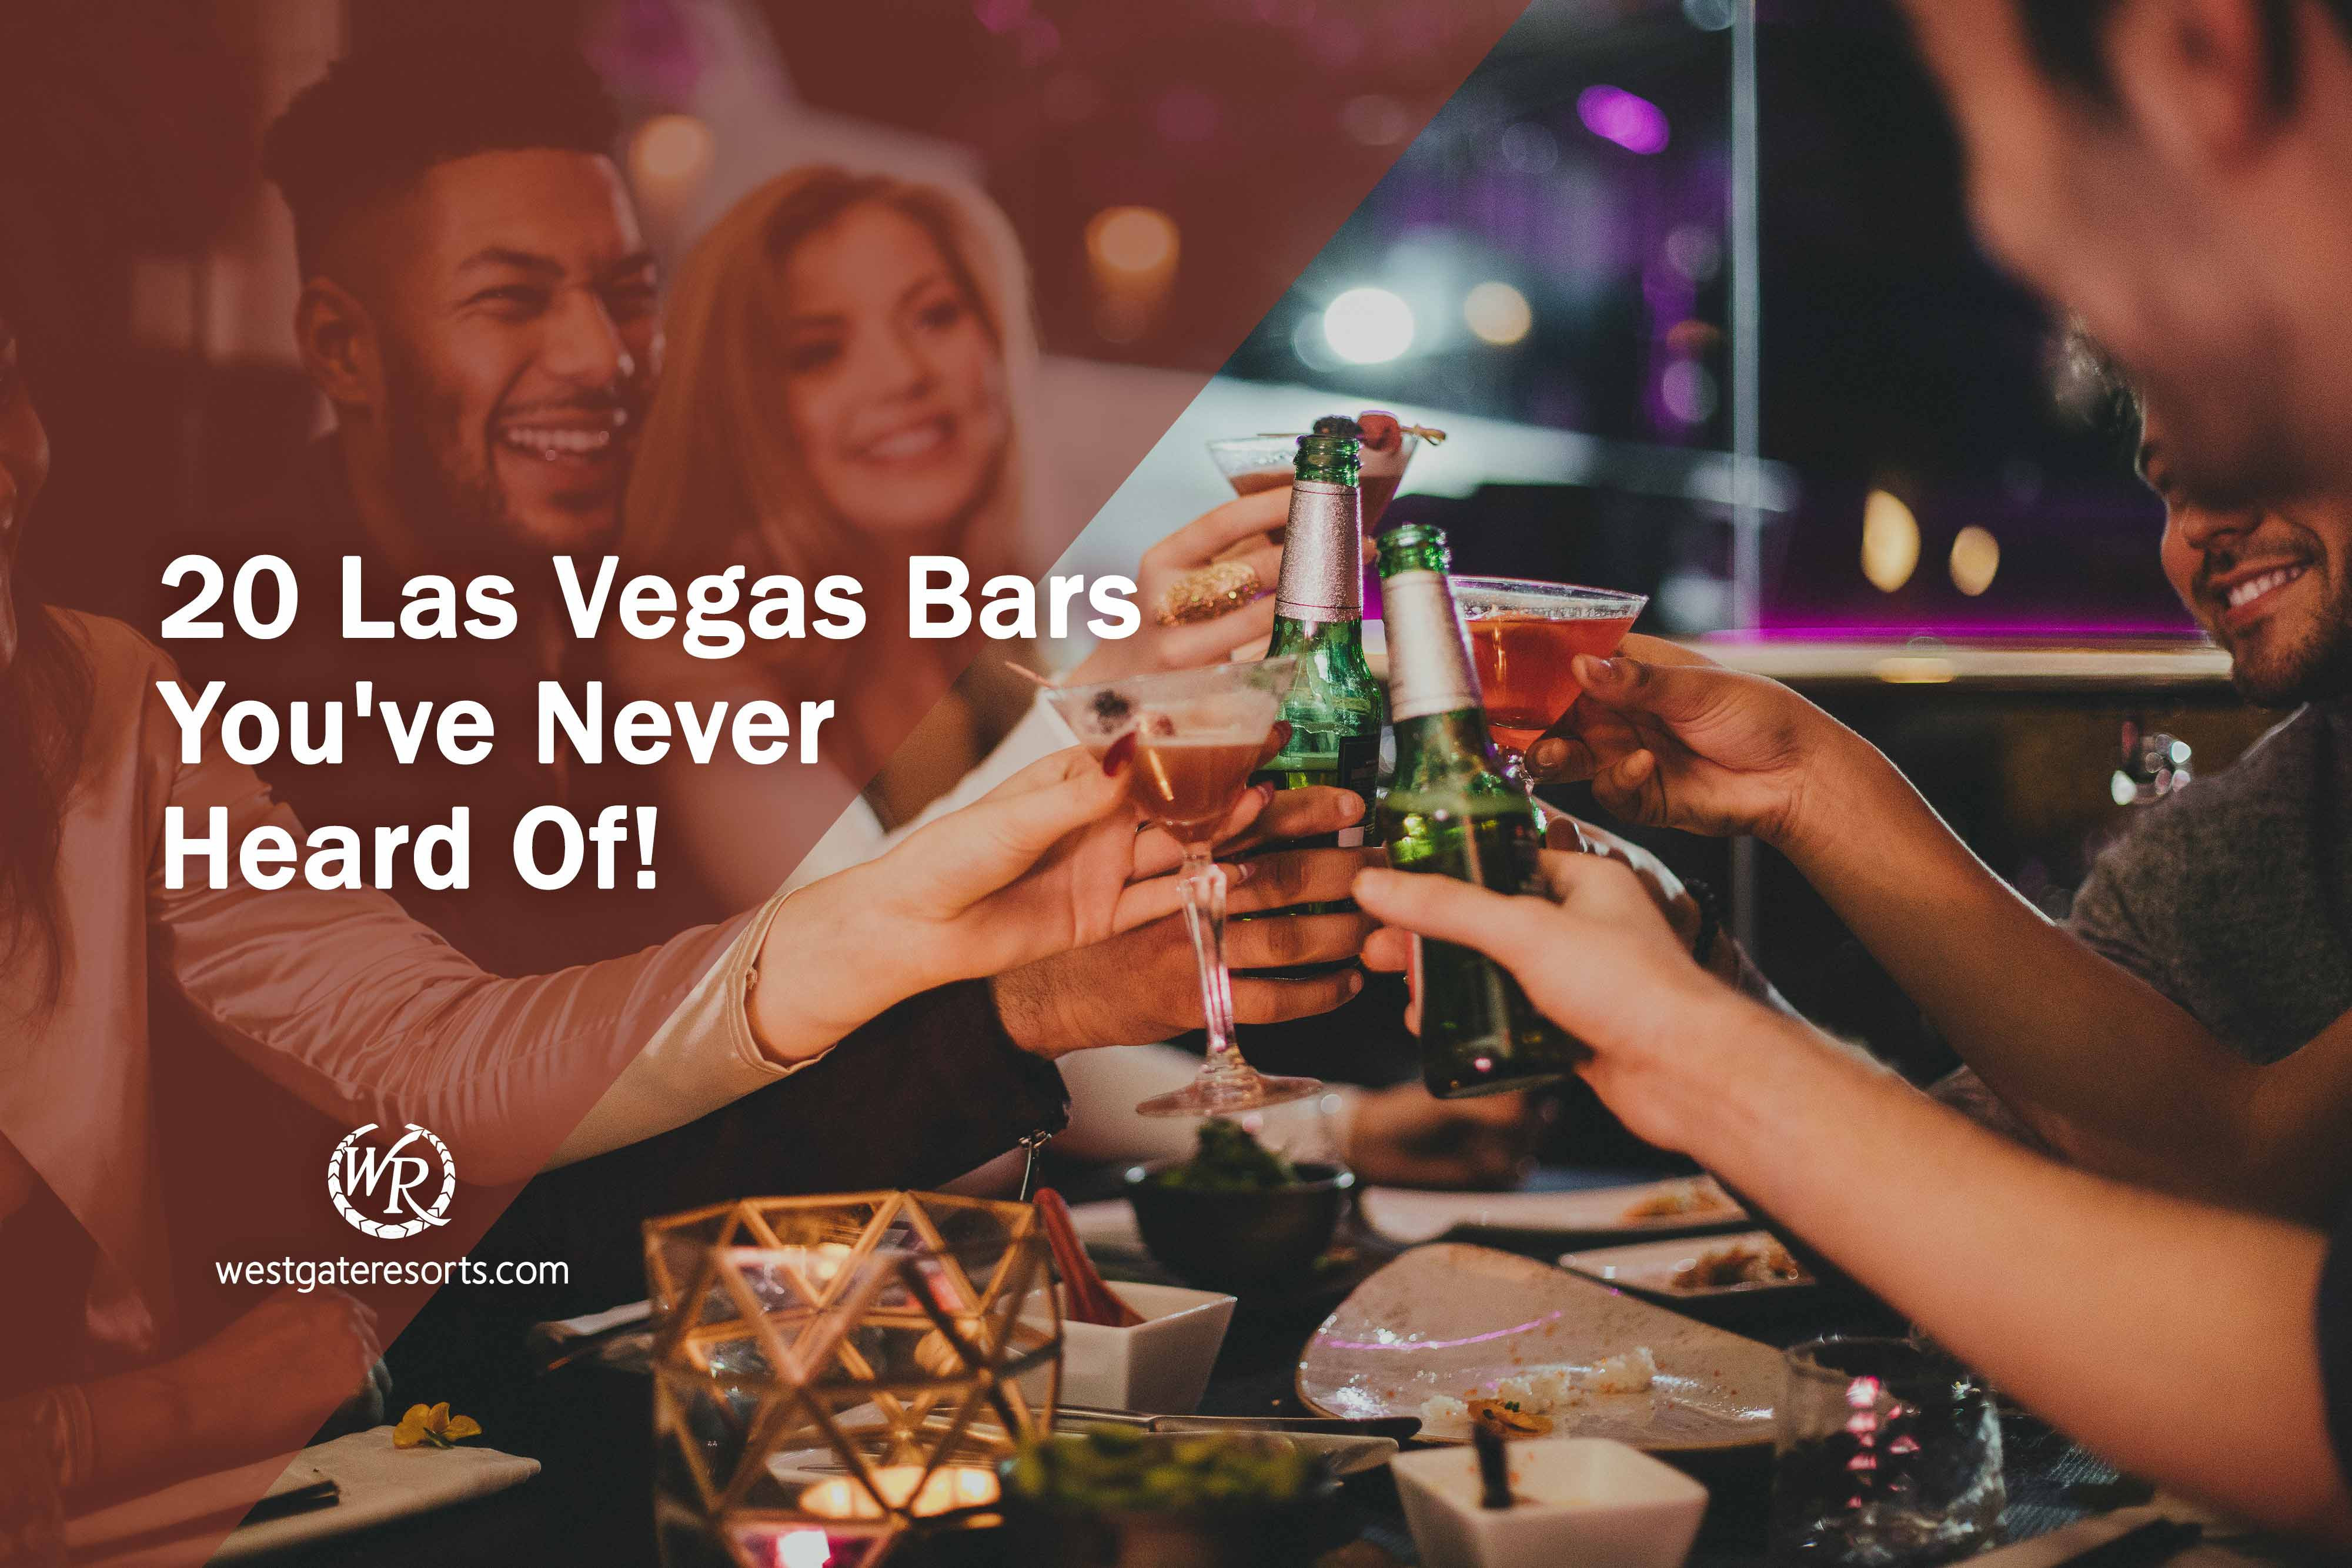 20 Las Vegas Bars You've Never Heard Of!